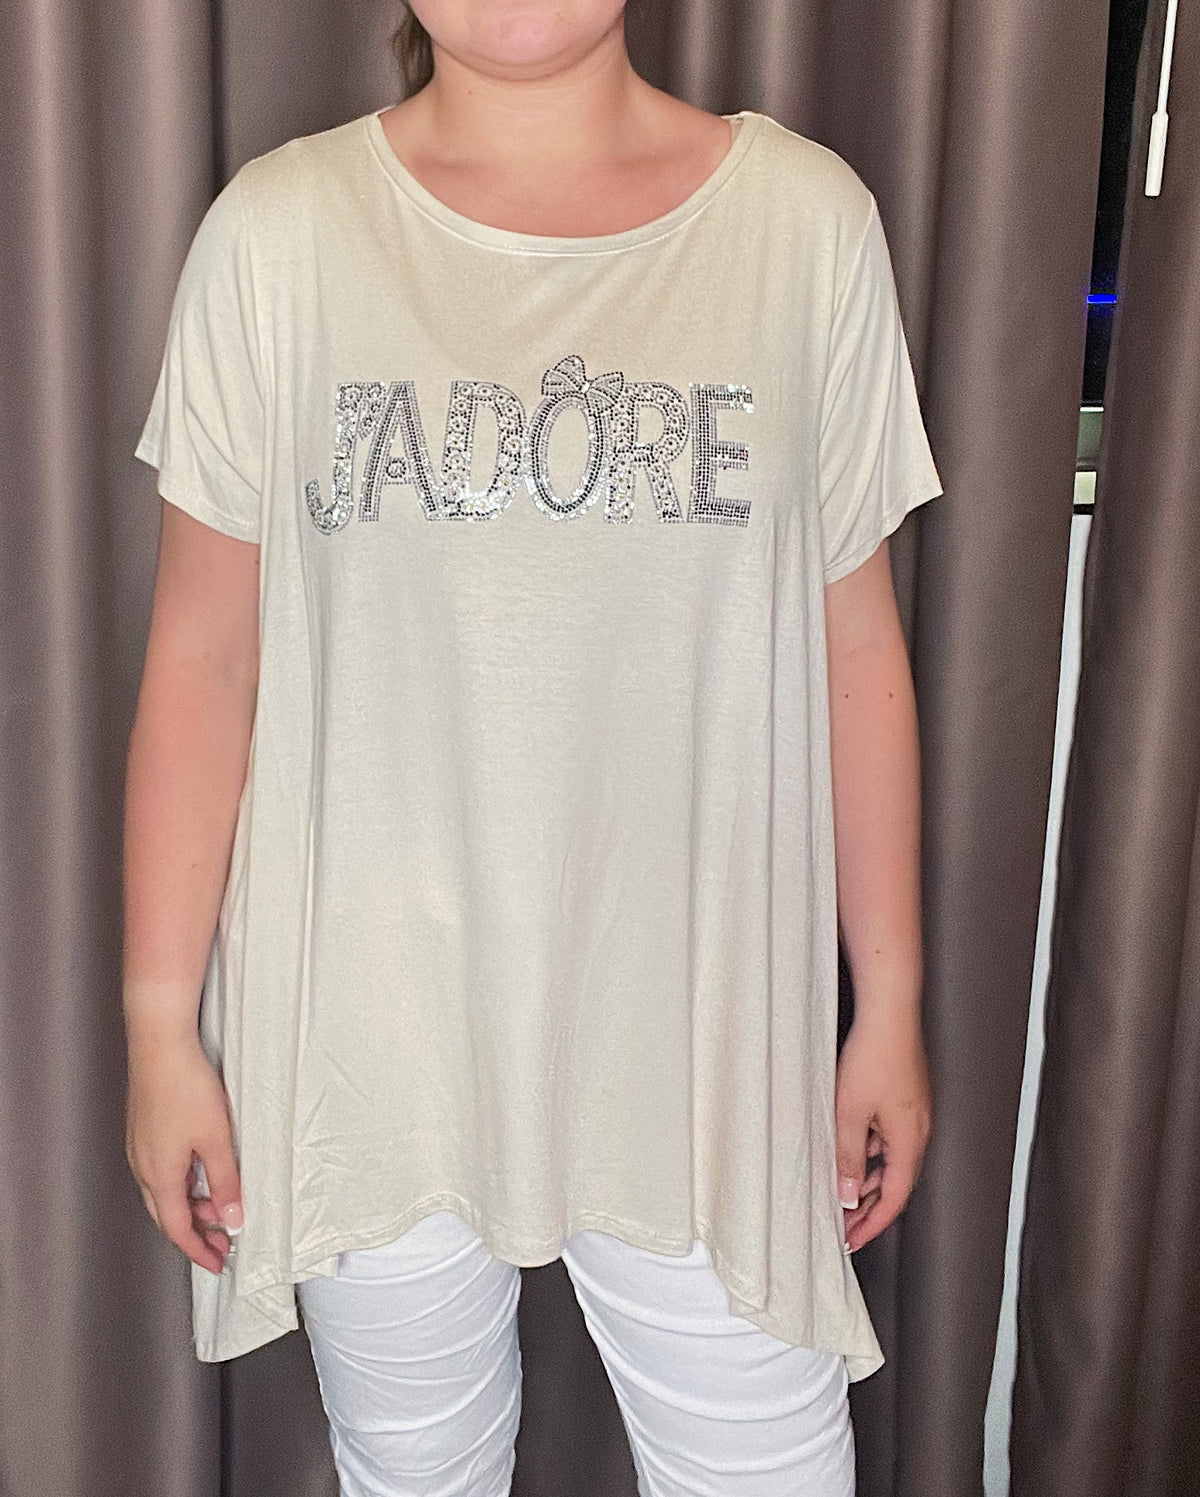 T-shirt ashape adore - Brystmål 130cm - ingen returret